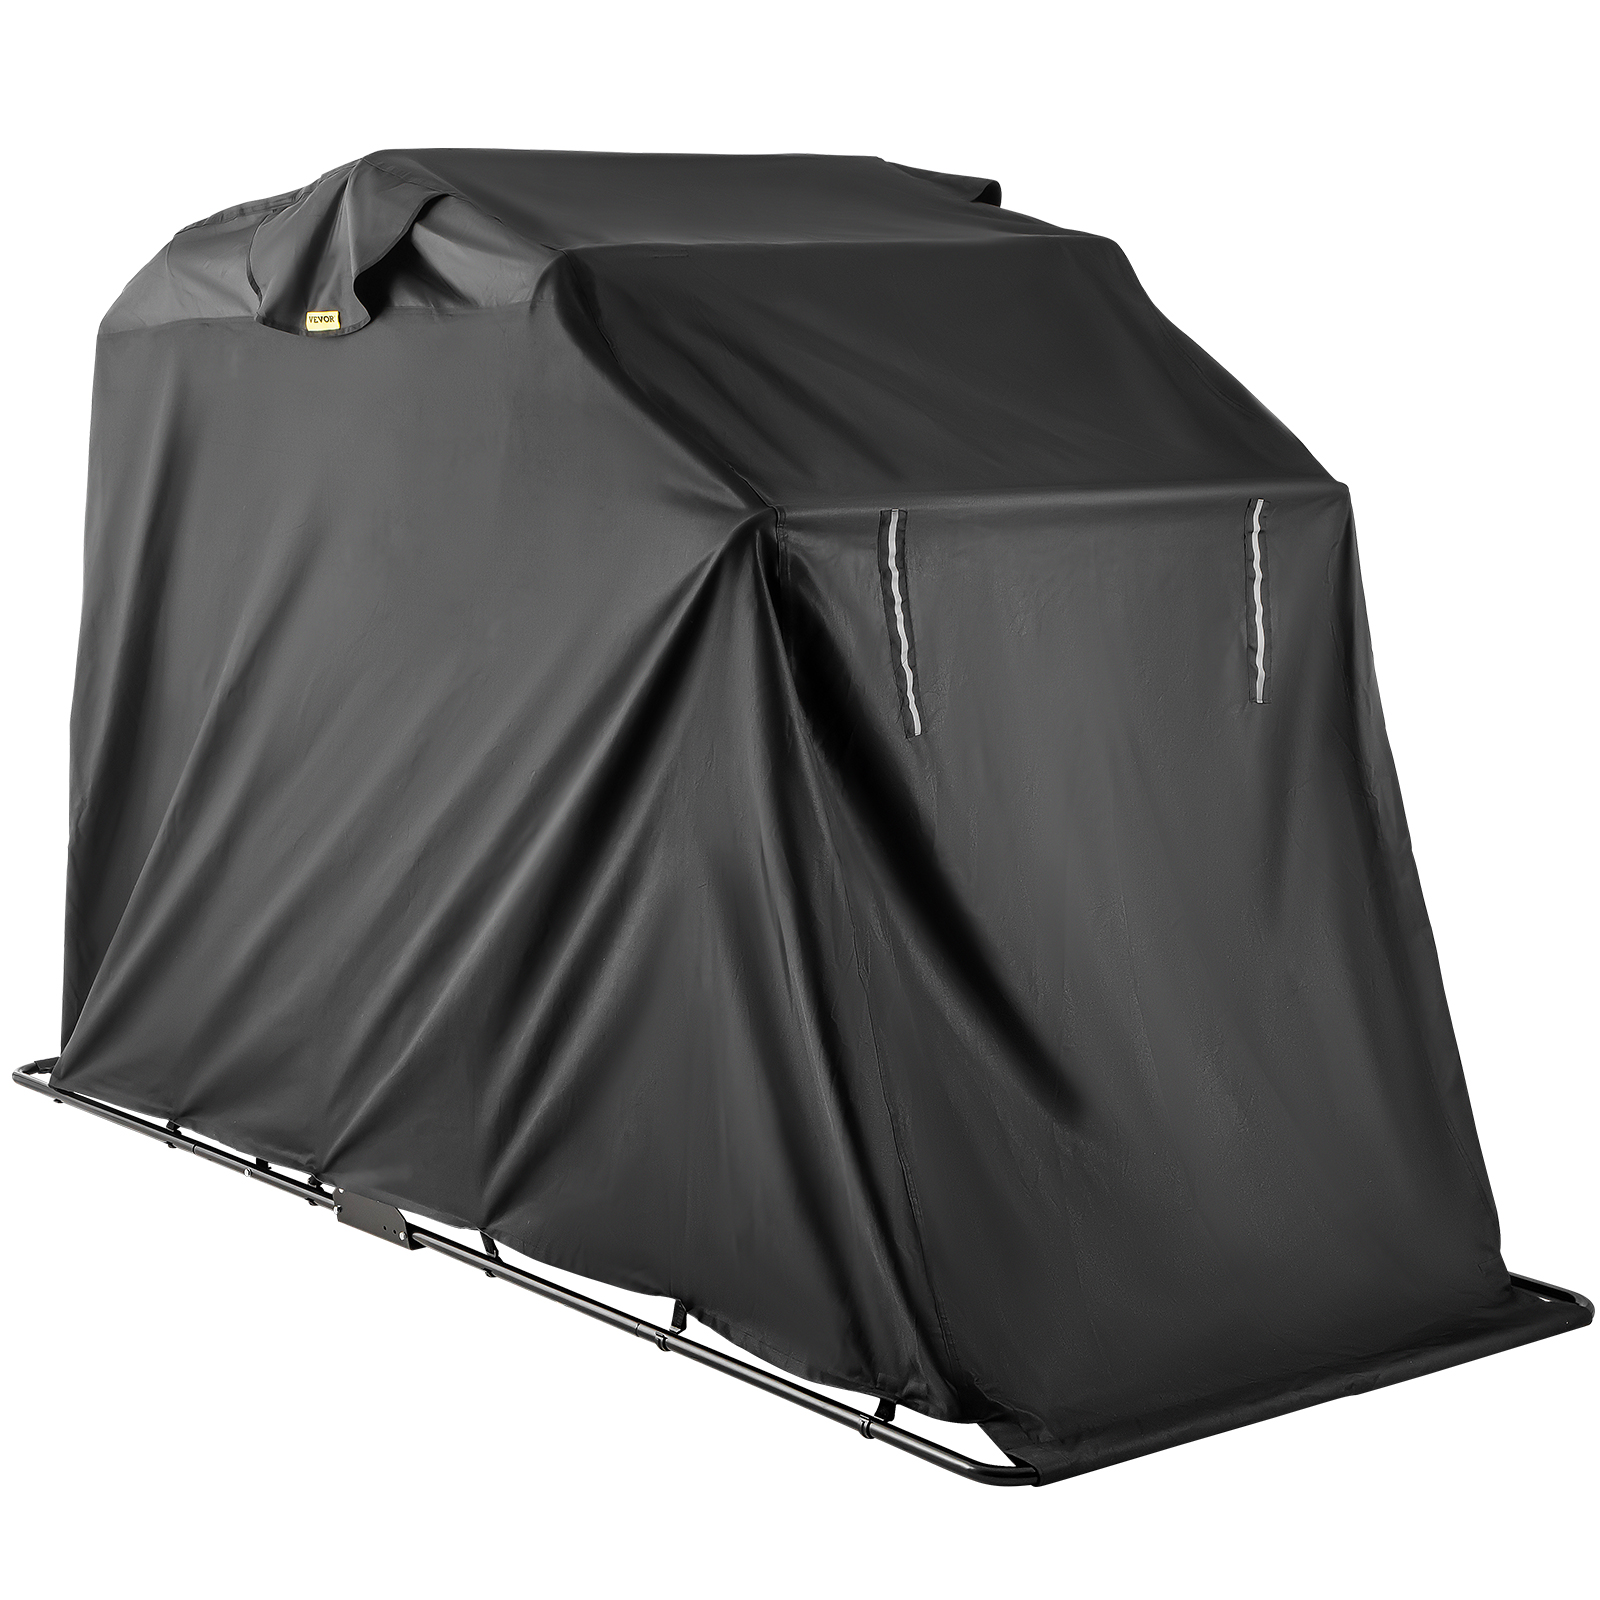 waterproof,motorcycle shelter, UV protected